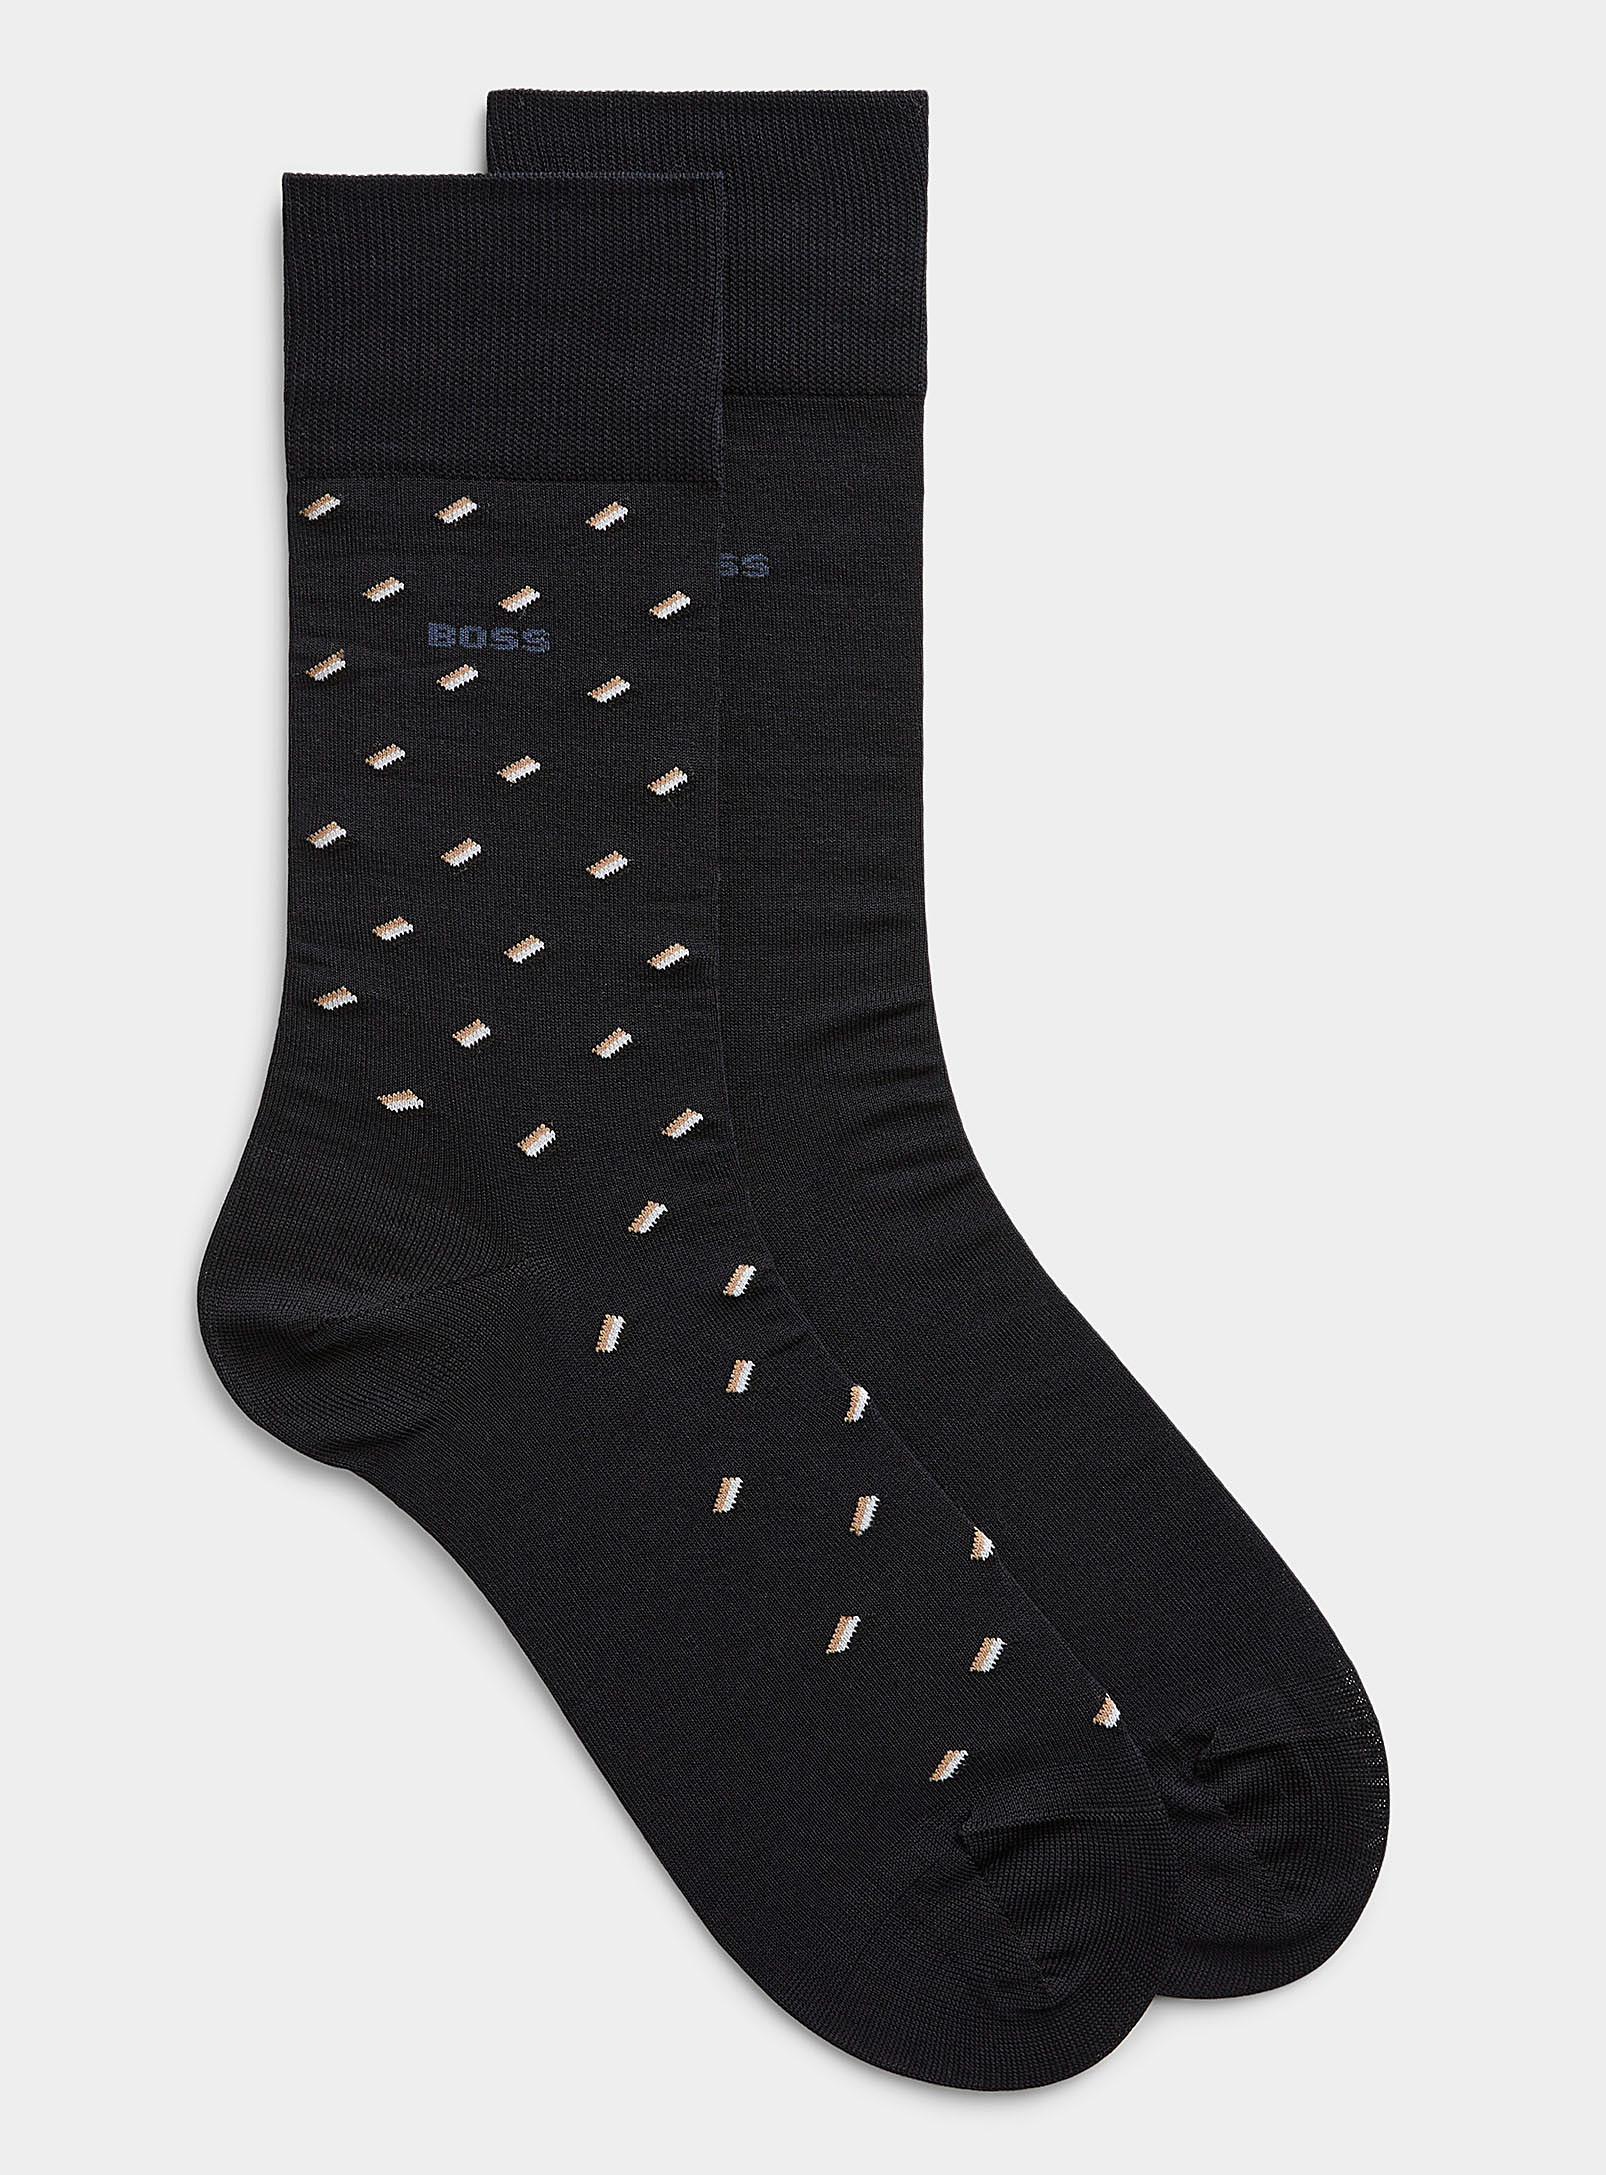 BOSS - Men's Solid and confetti logo socks Set of 2